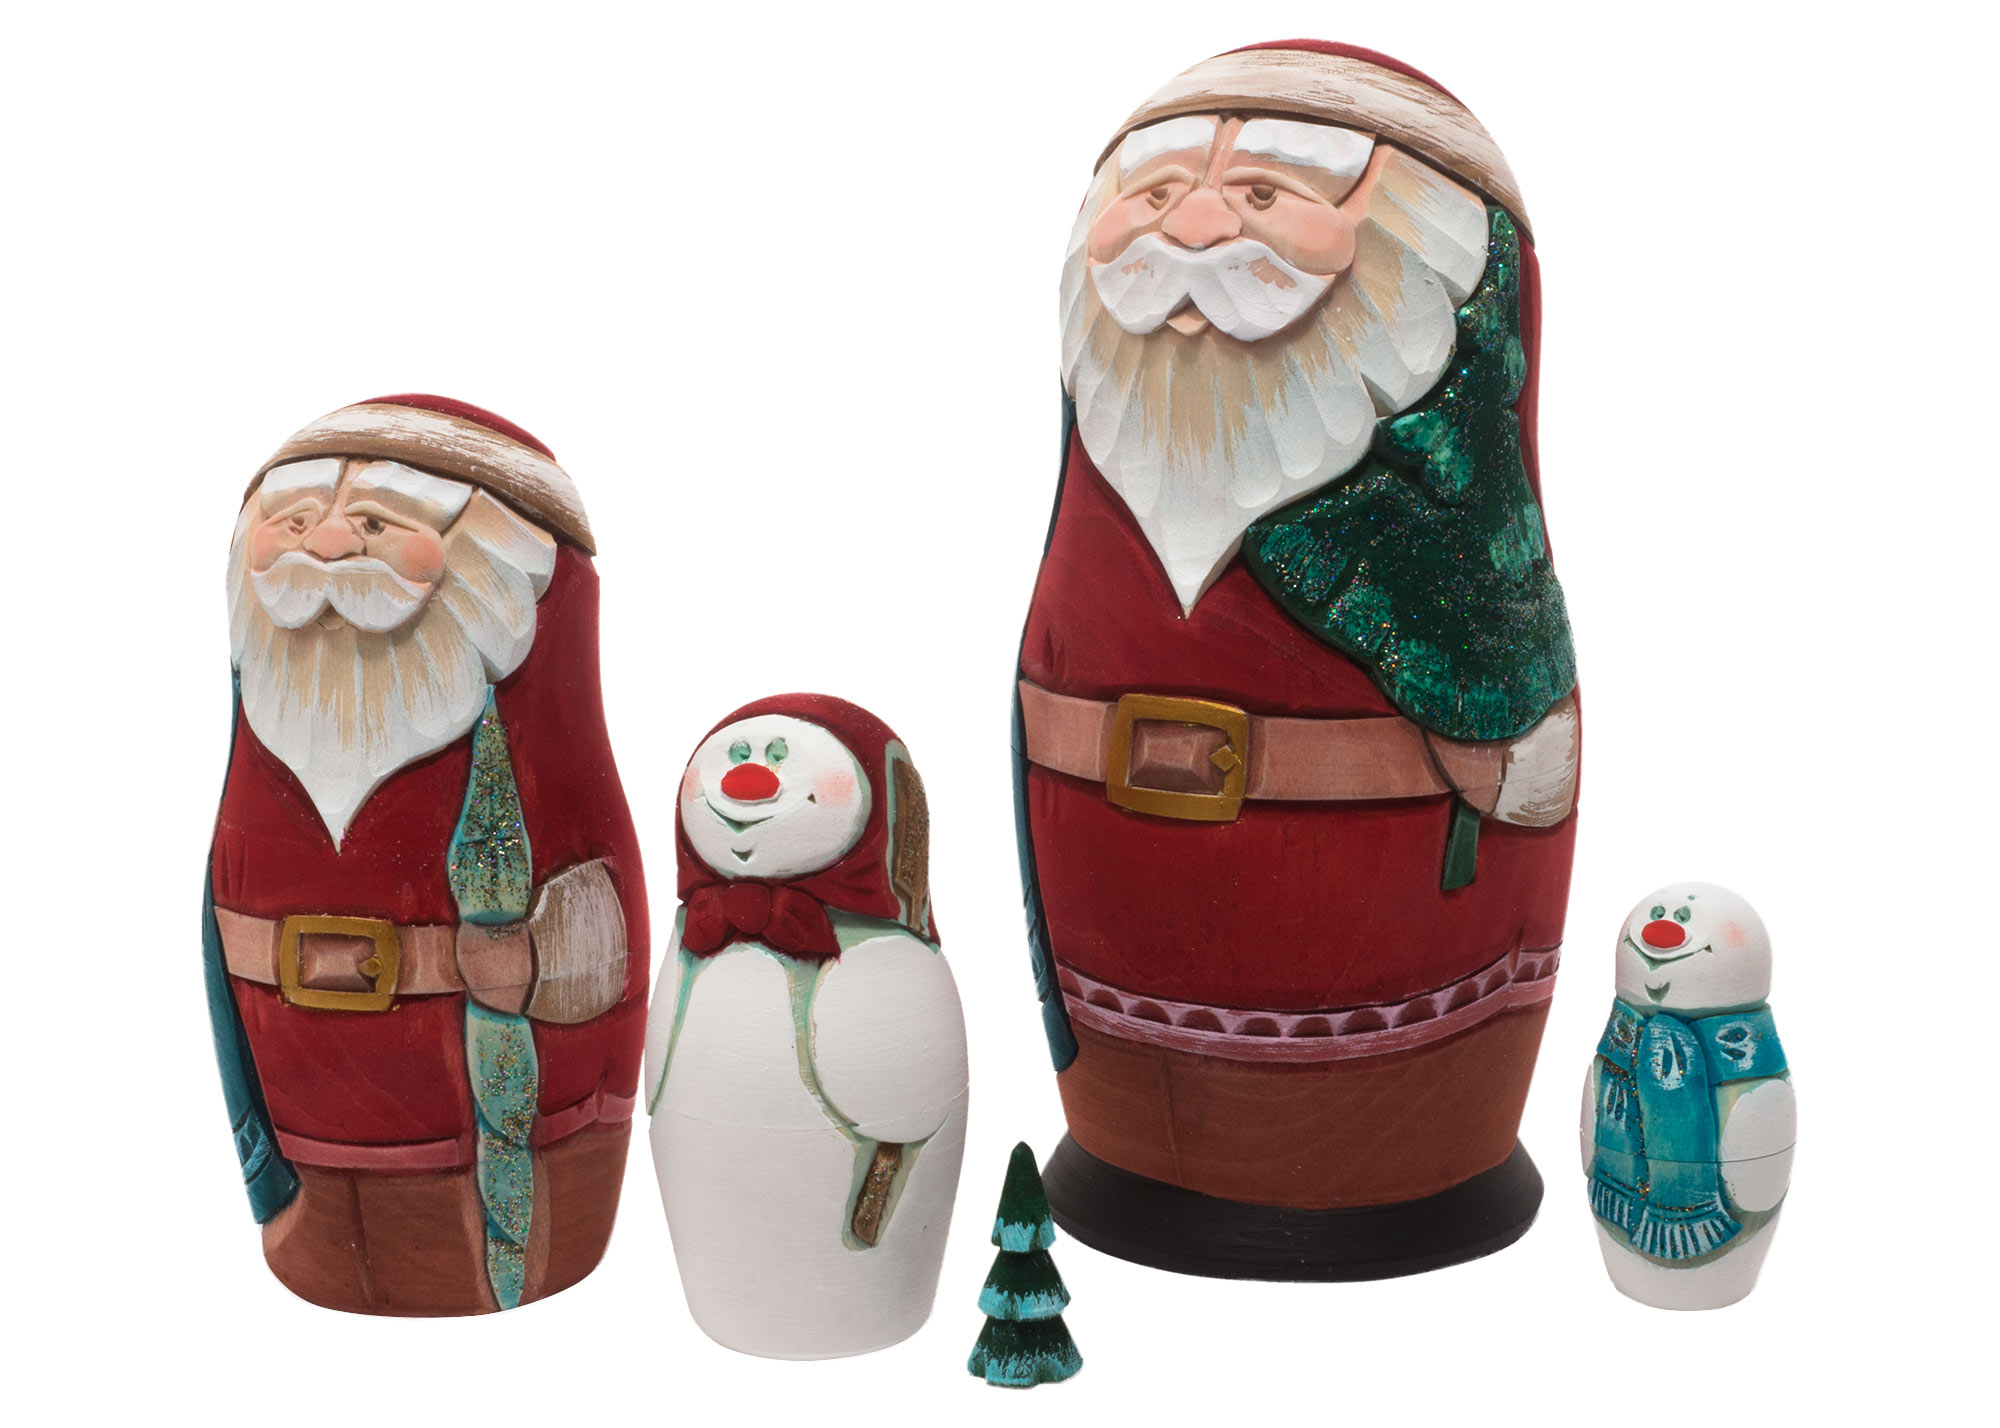 Buy Carved Christmas Nesting Doll 5pc./6" at GoldenCockerel.com